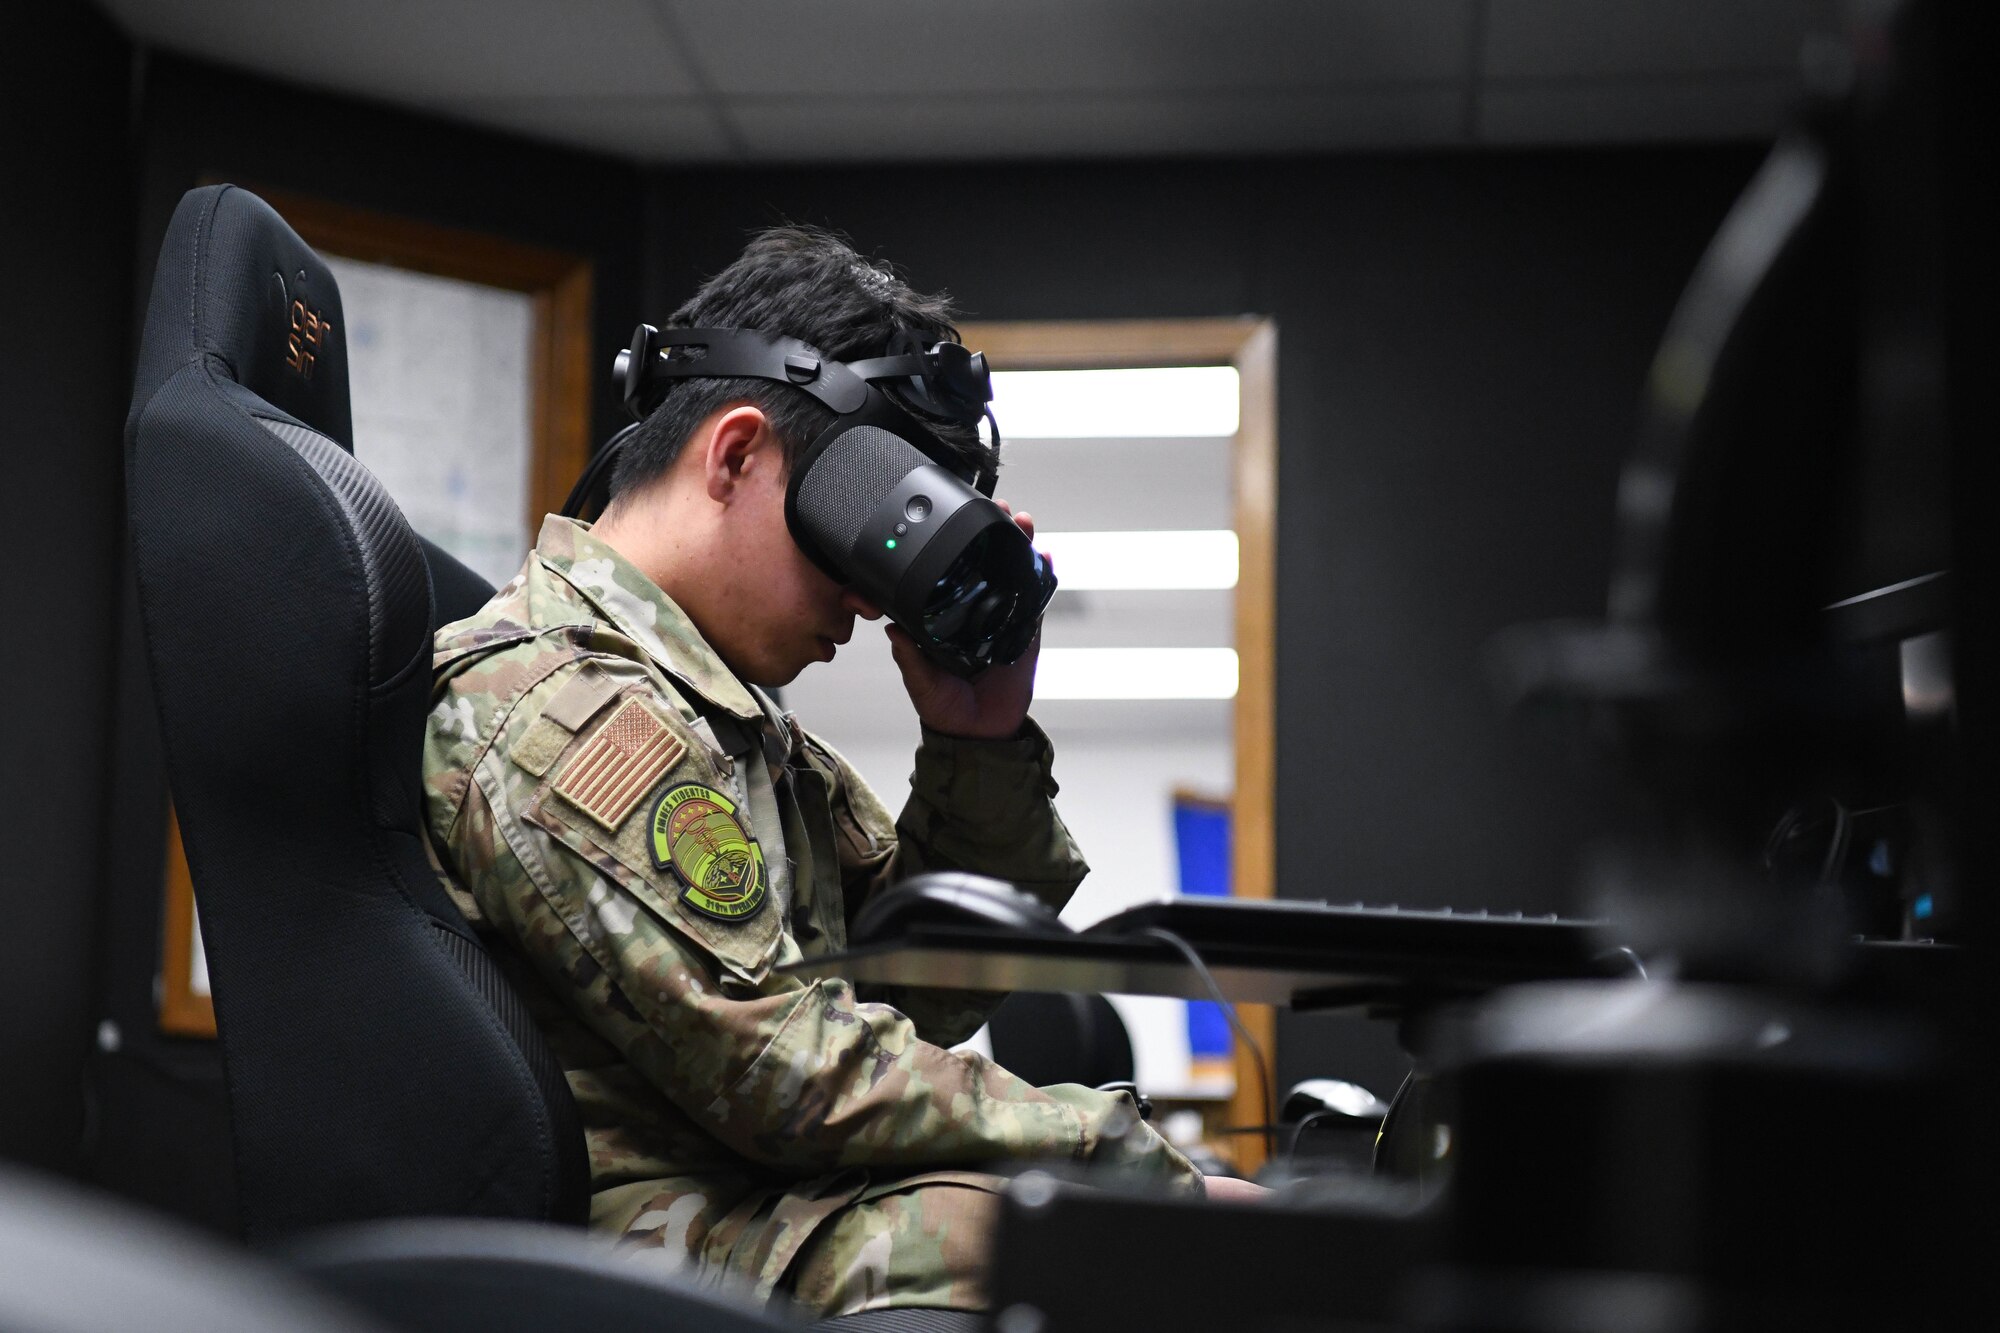 Man in military uniform adjusts virtual reality headset